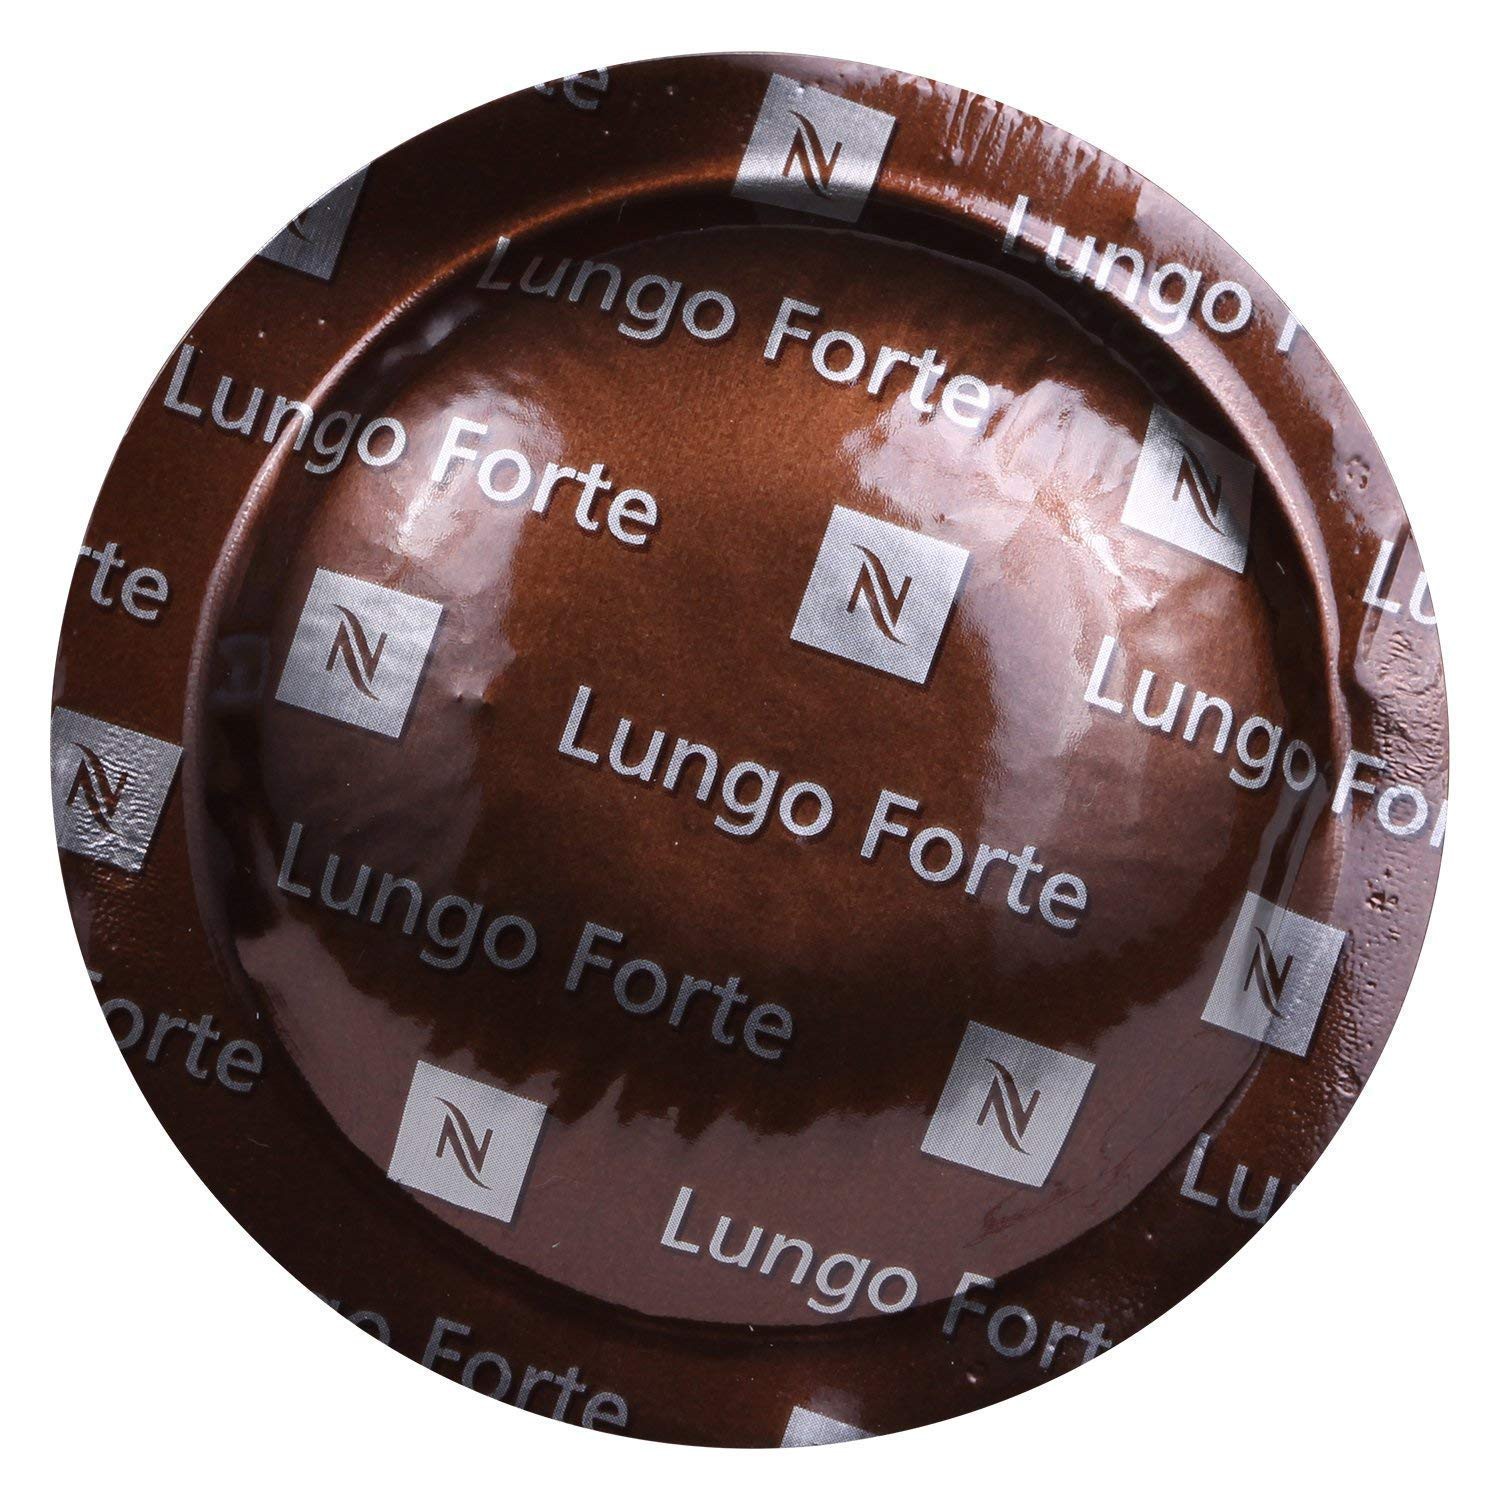 Nespresso+Pro+Lungo+Forte+N2+R1+Pod%2FCapsule+Each